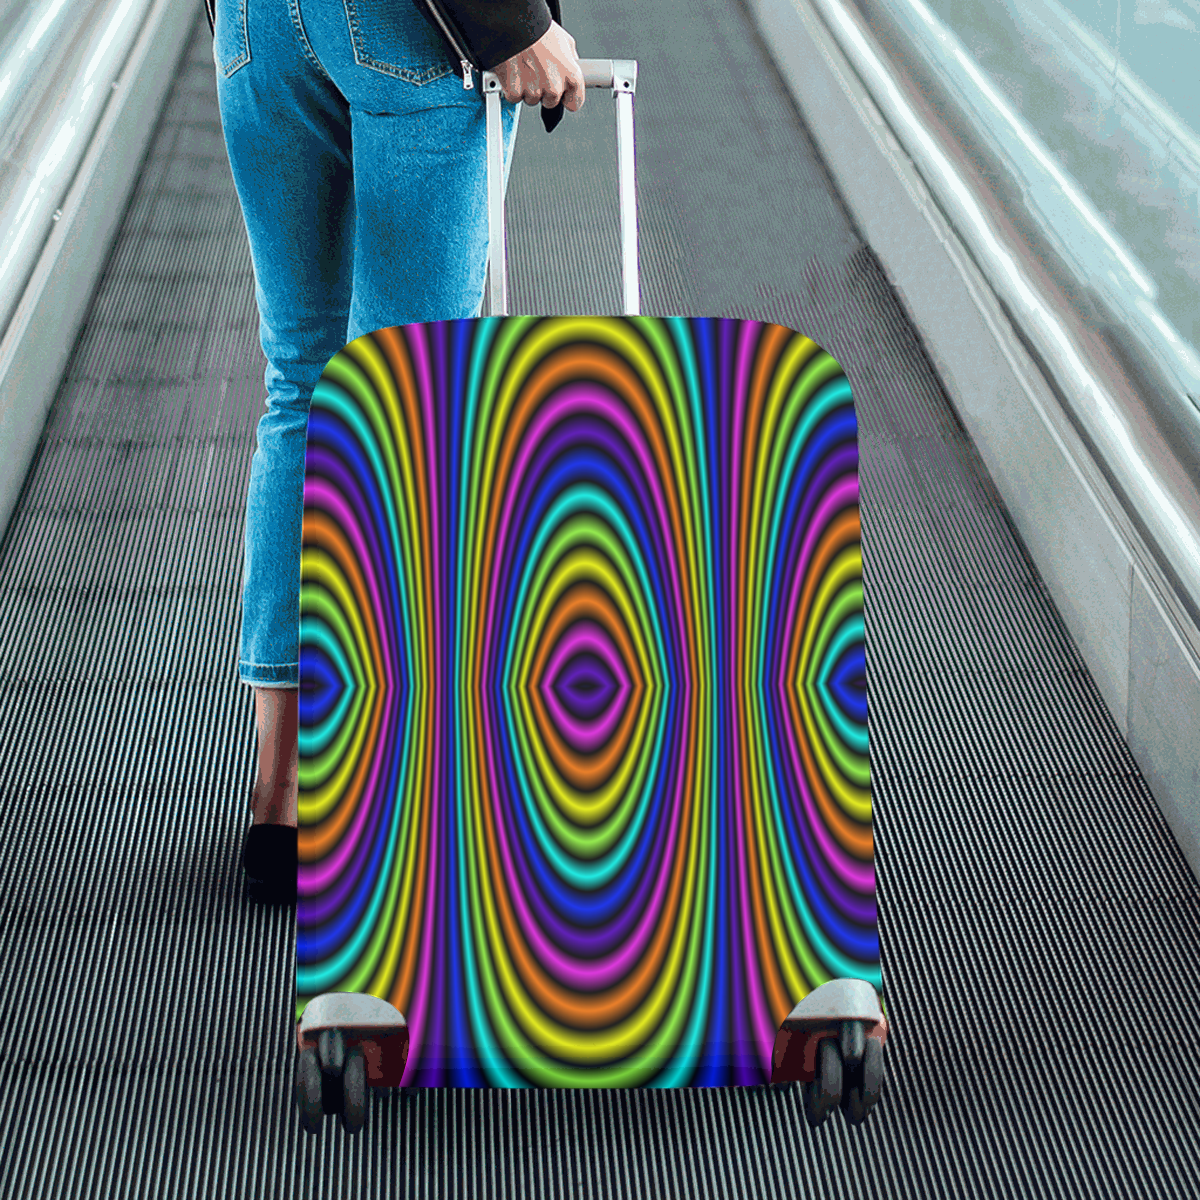 O rainbow Luggage Cover/Large 26"-28"